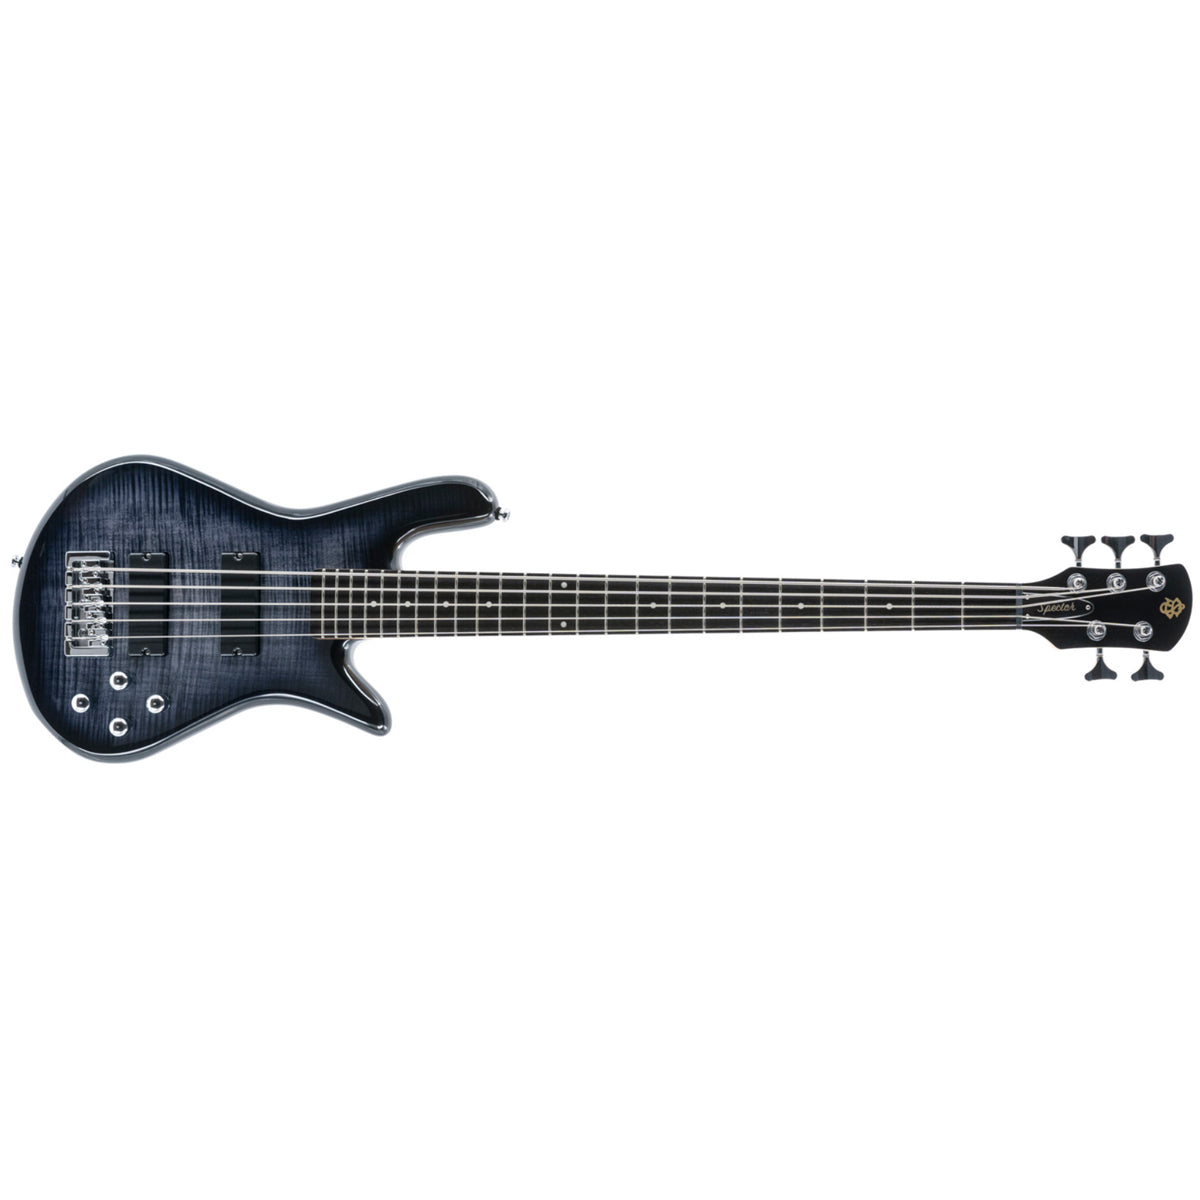 Spector Legend 5 Standard Bass Guitar 5-String Black Stain Gloss - LG5STBKS